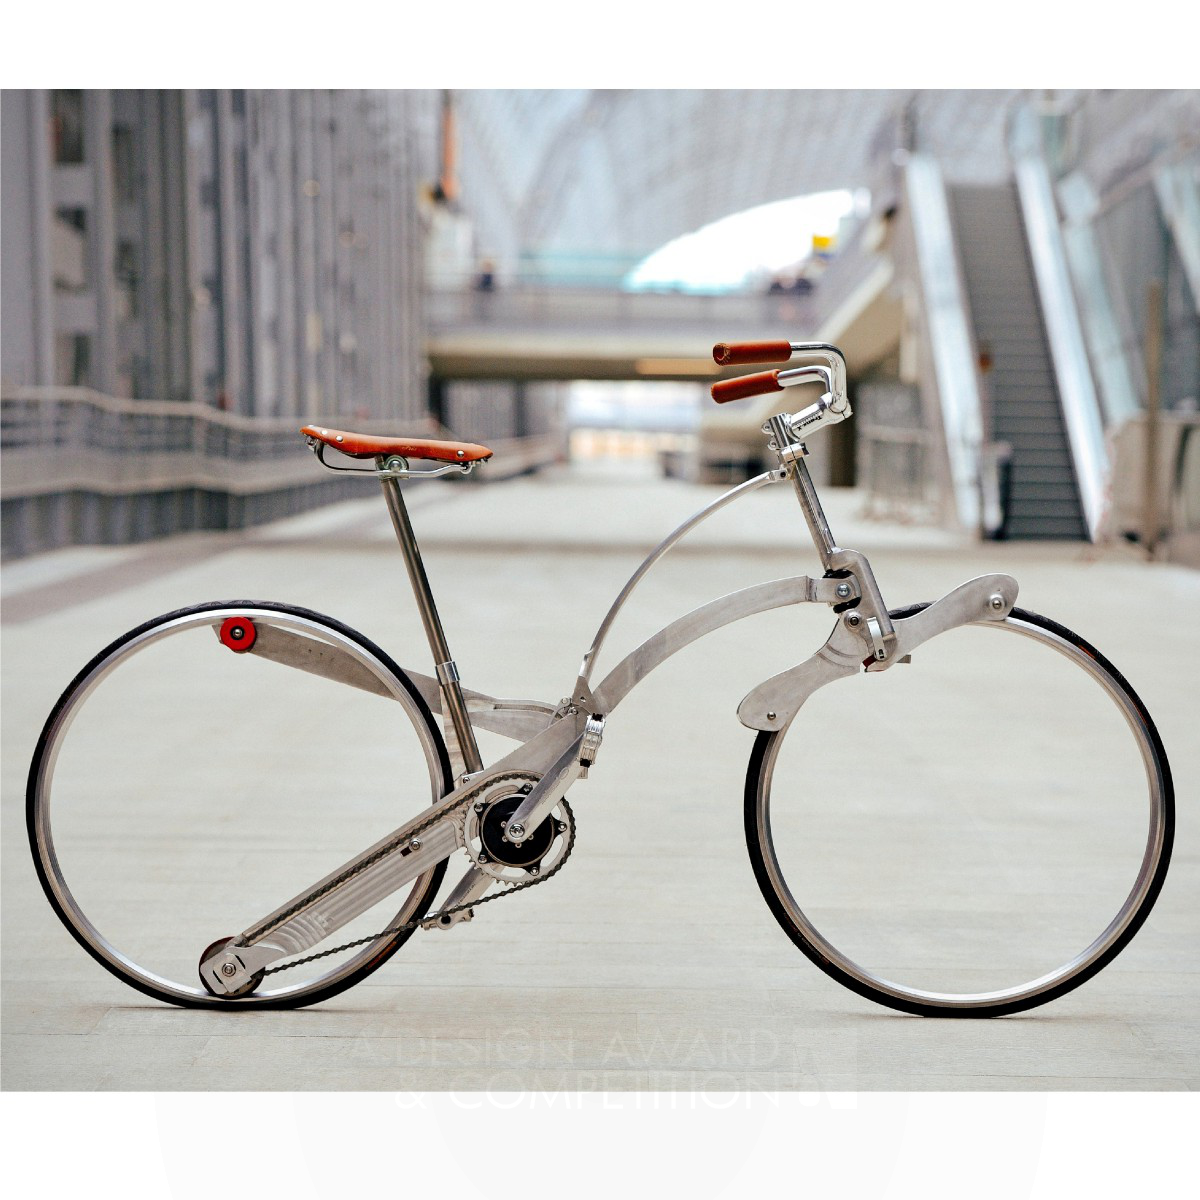 Sada Bike Hubless Foldable Bike